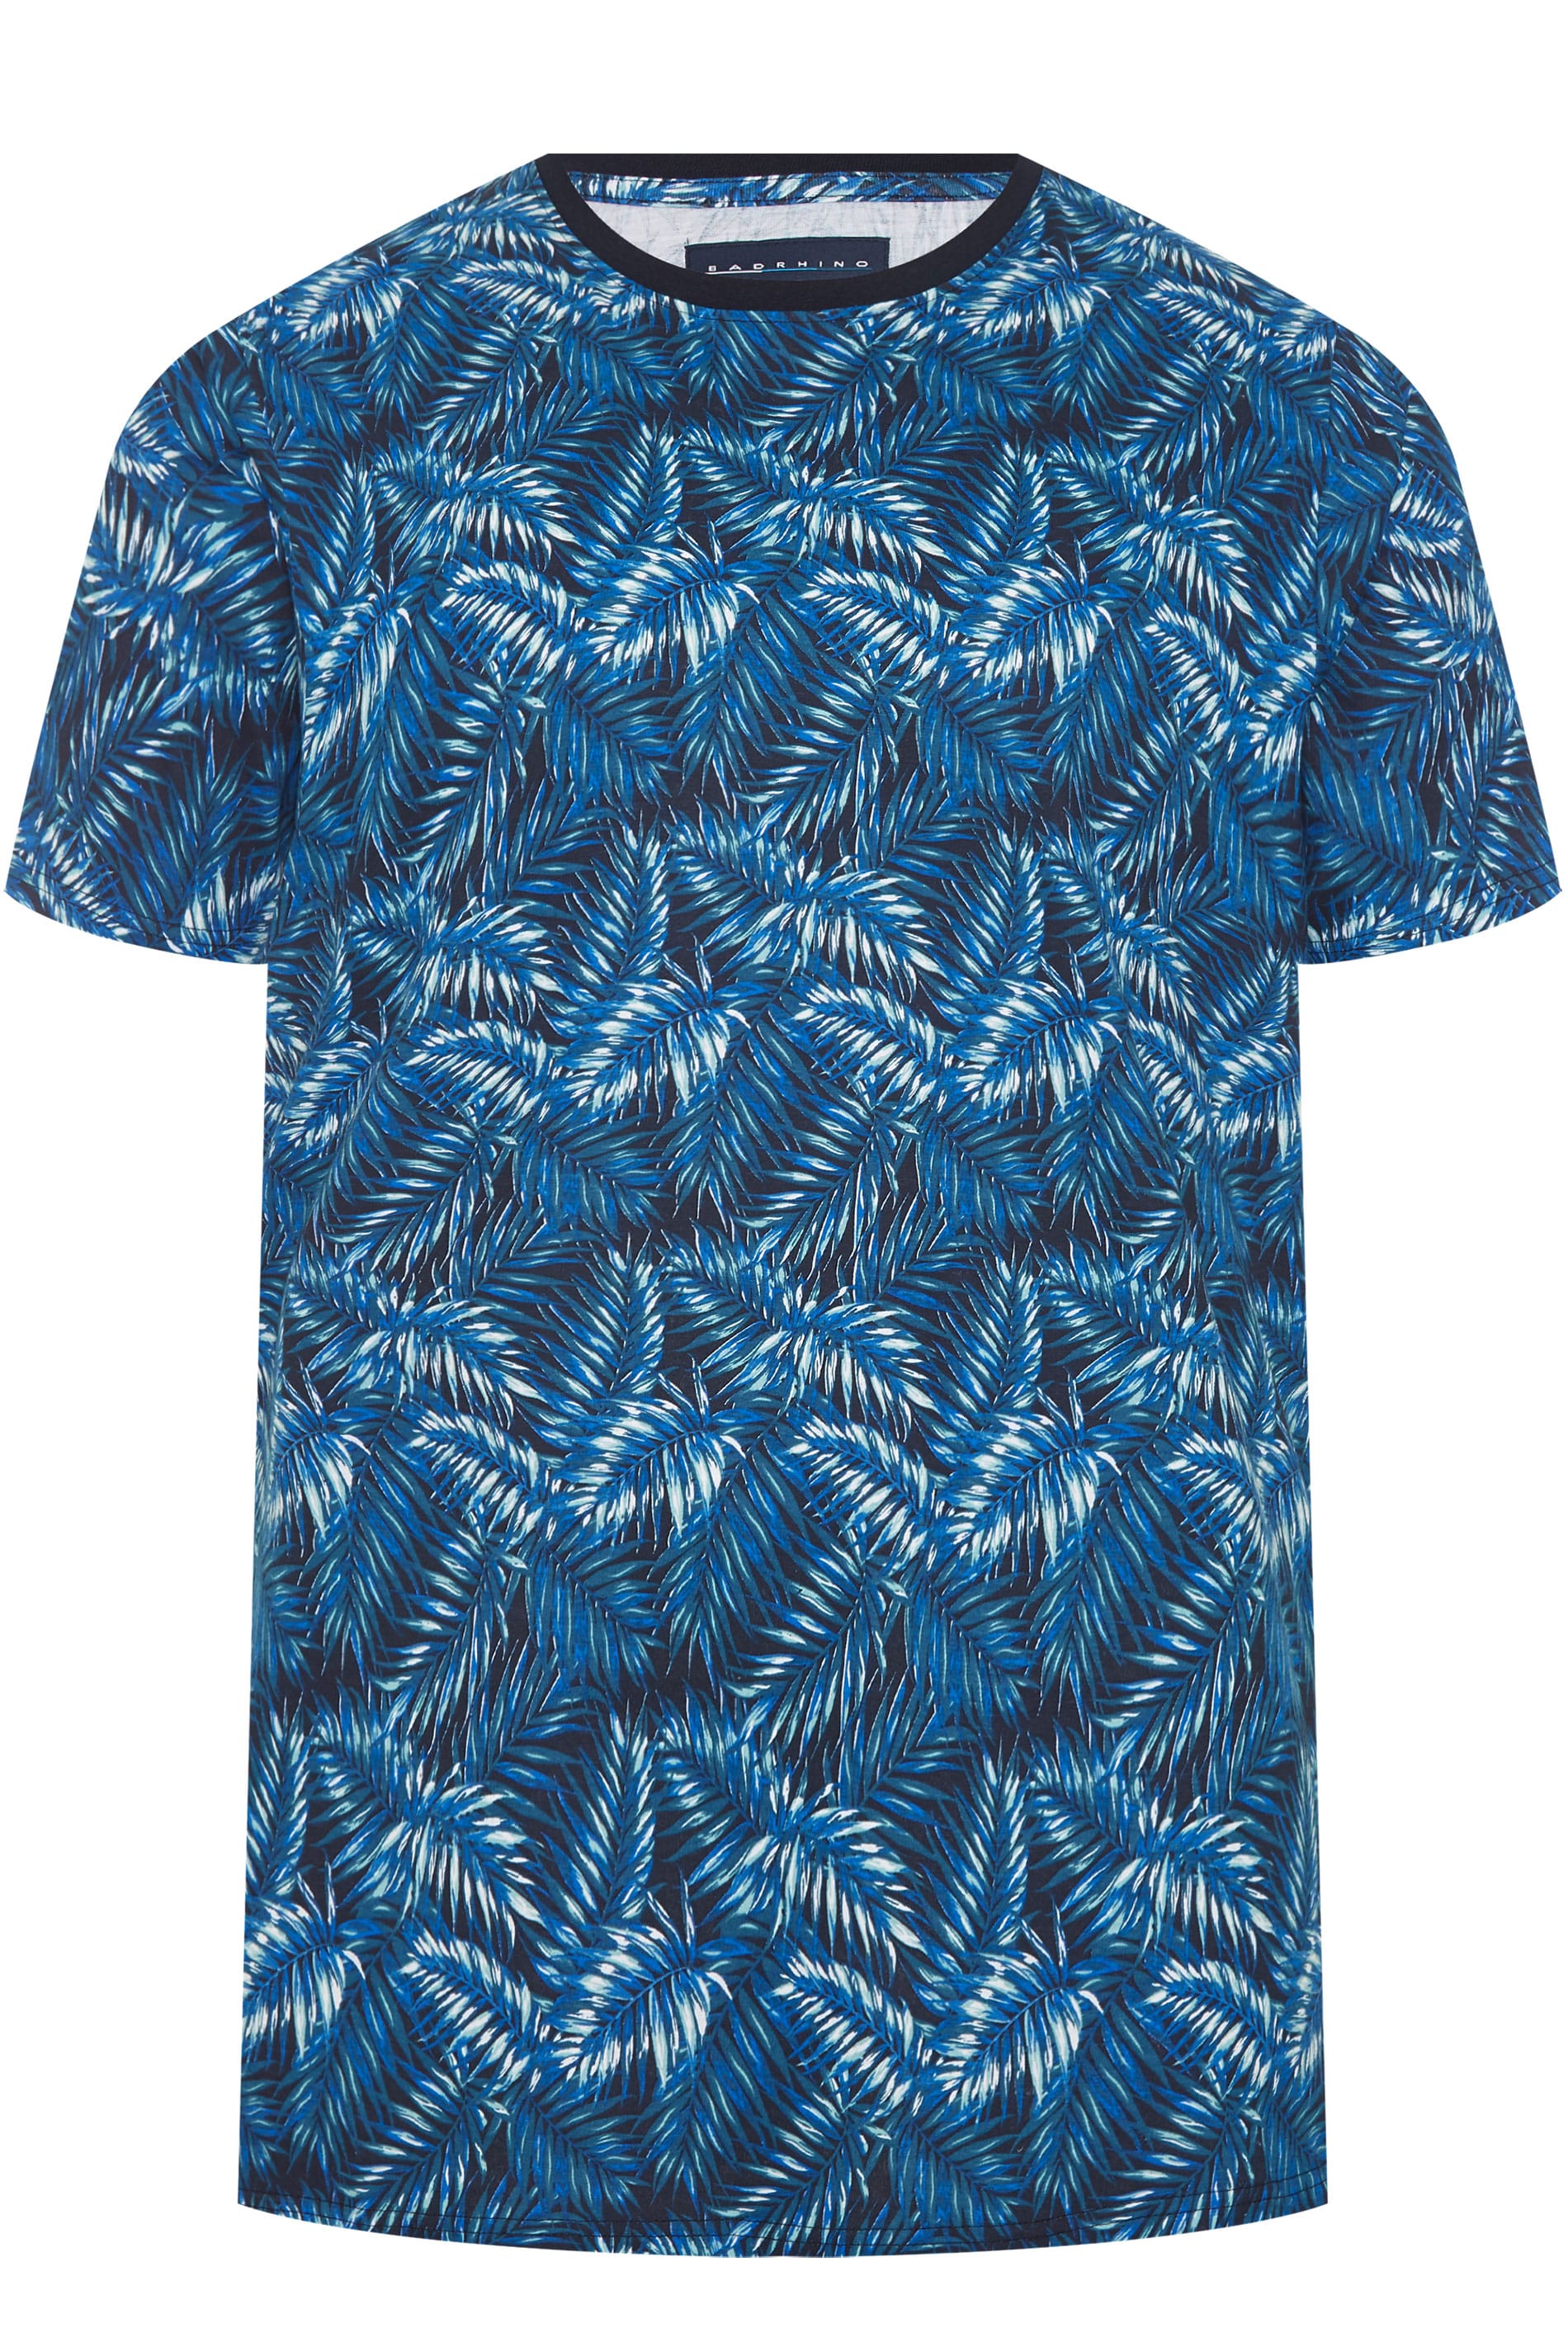 BadRhino Blue Tropical Leaf Print T-Shirt_9c3b.jpg